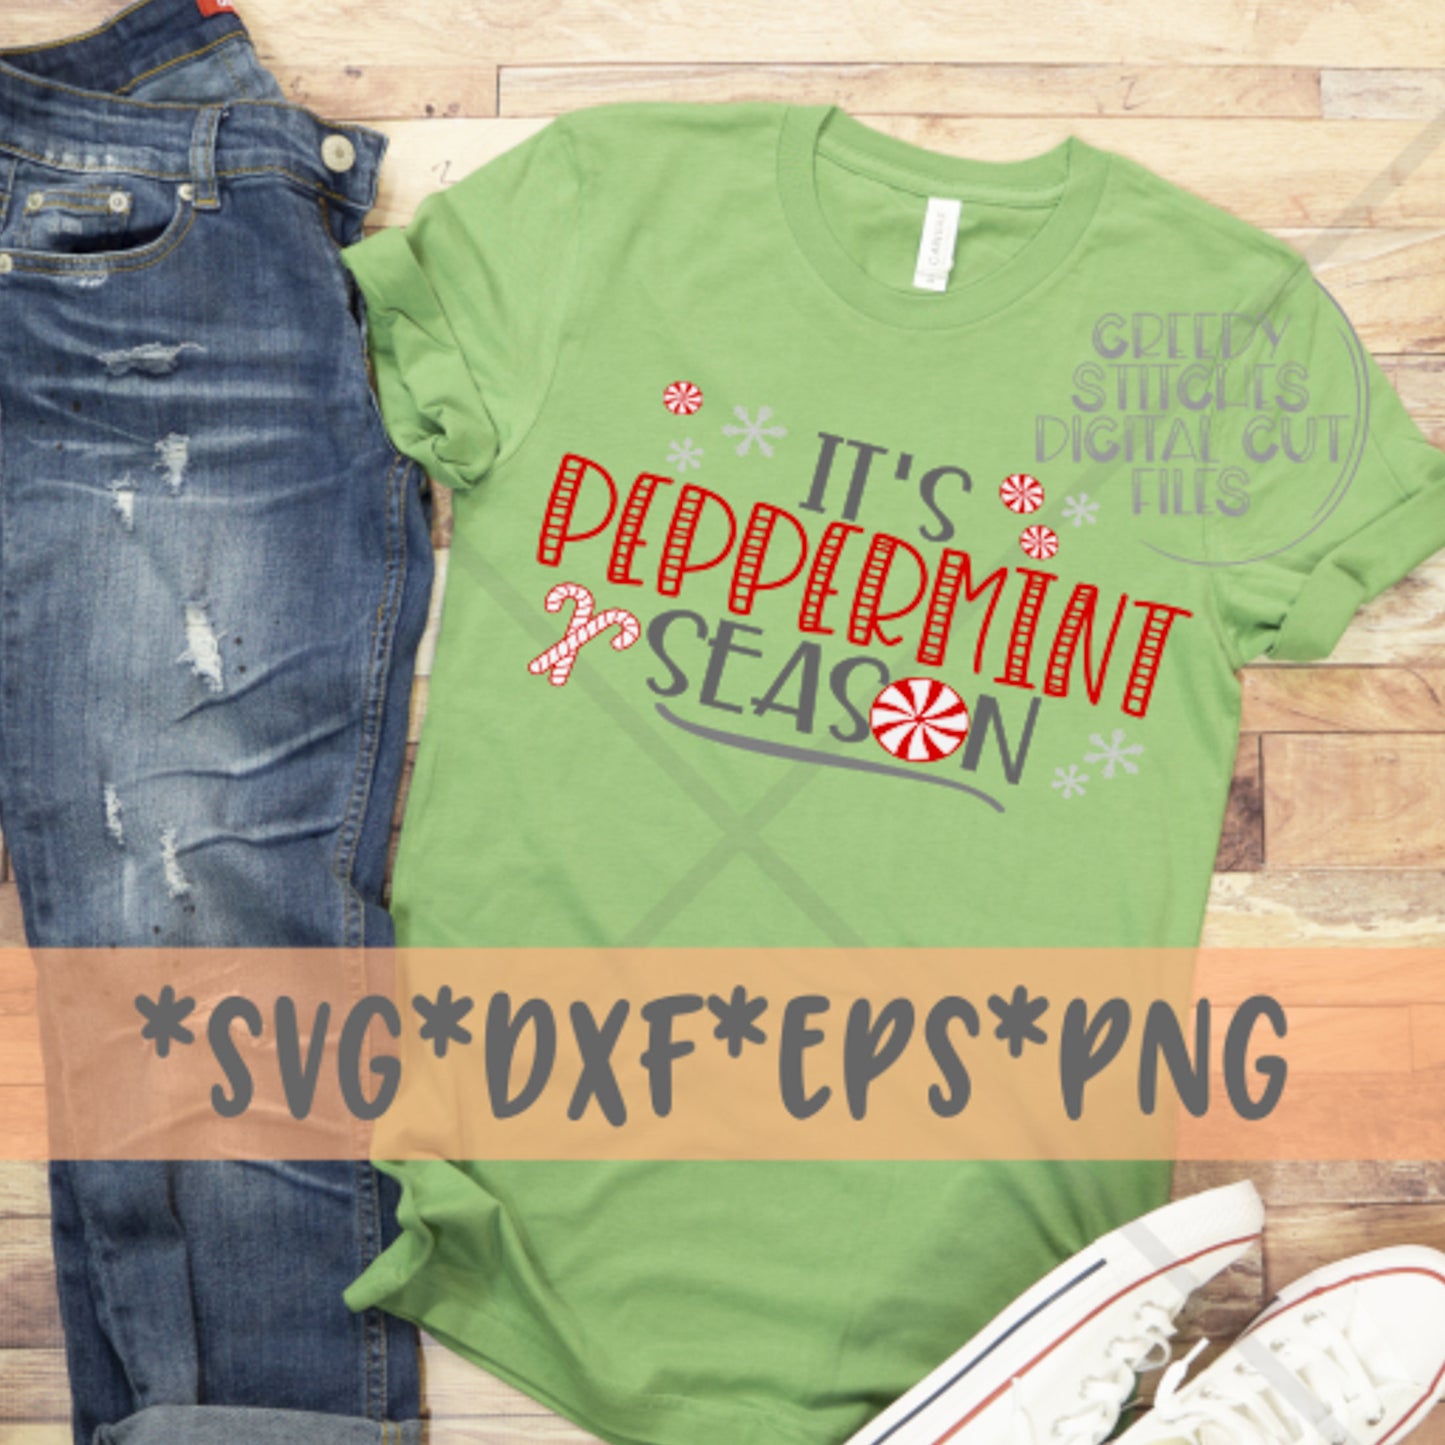 It&#39;s Peppermint Season svg dxf eps png.  Santa SvG | Peppermint SvG | Peppermint Season SvG | Christmas SvG | Instant Download Cut File